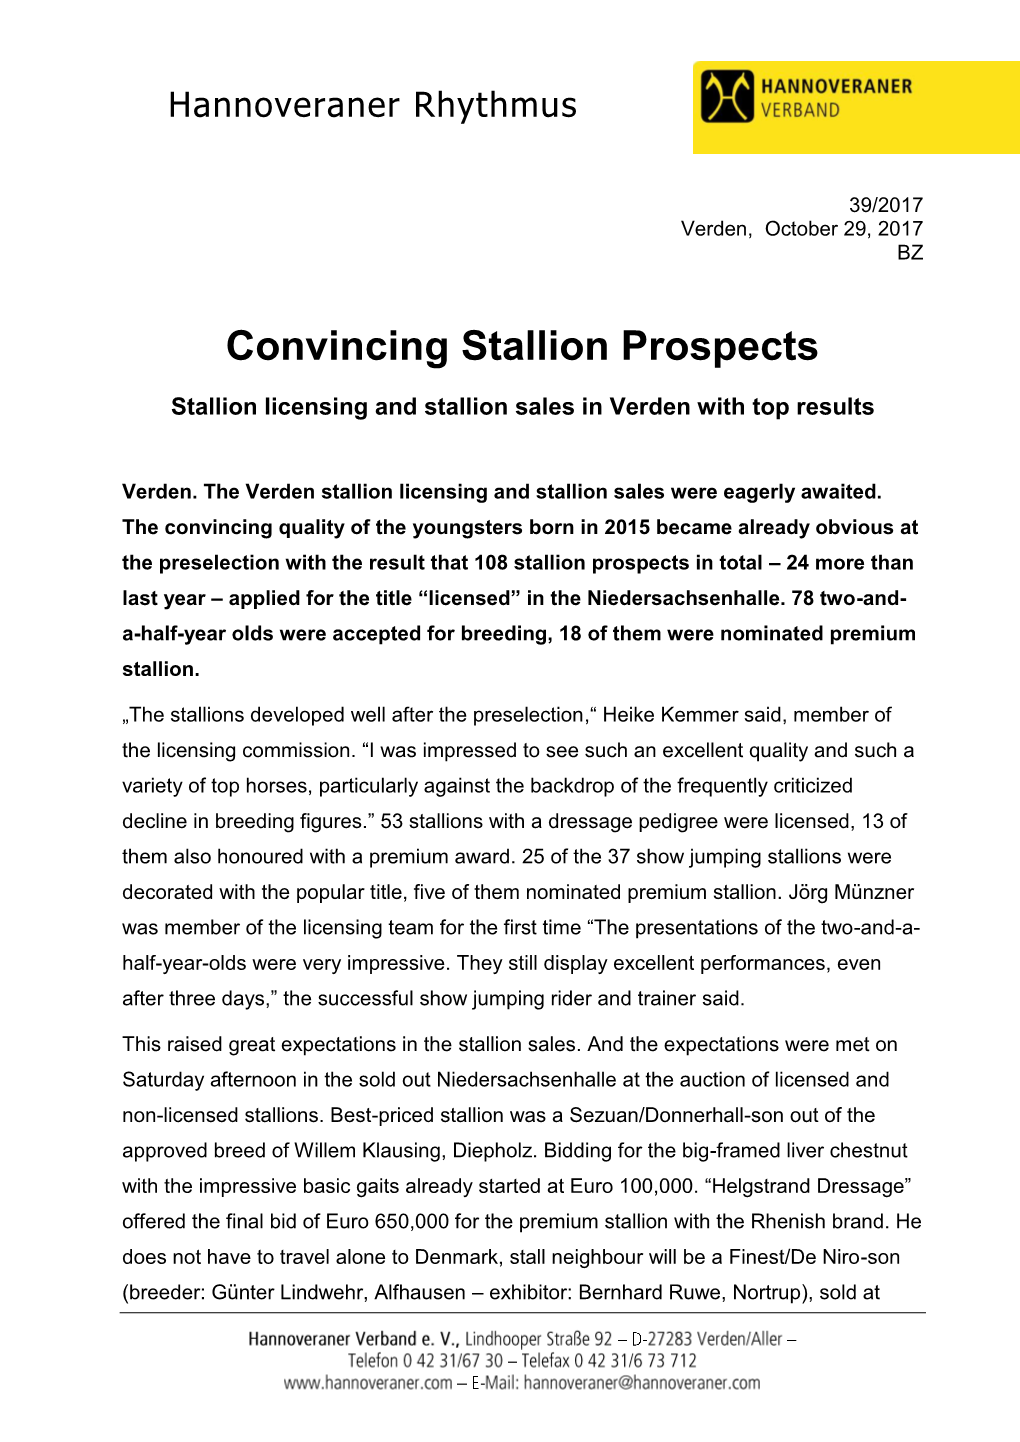 PR 39-2017 Stallion Licensing